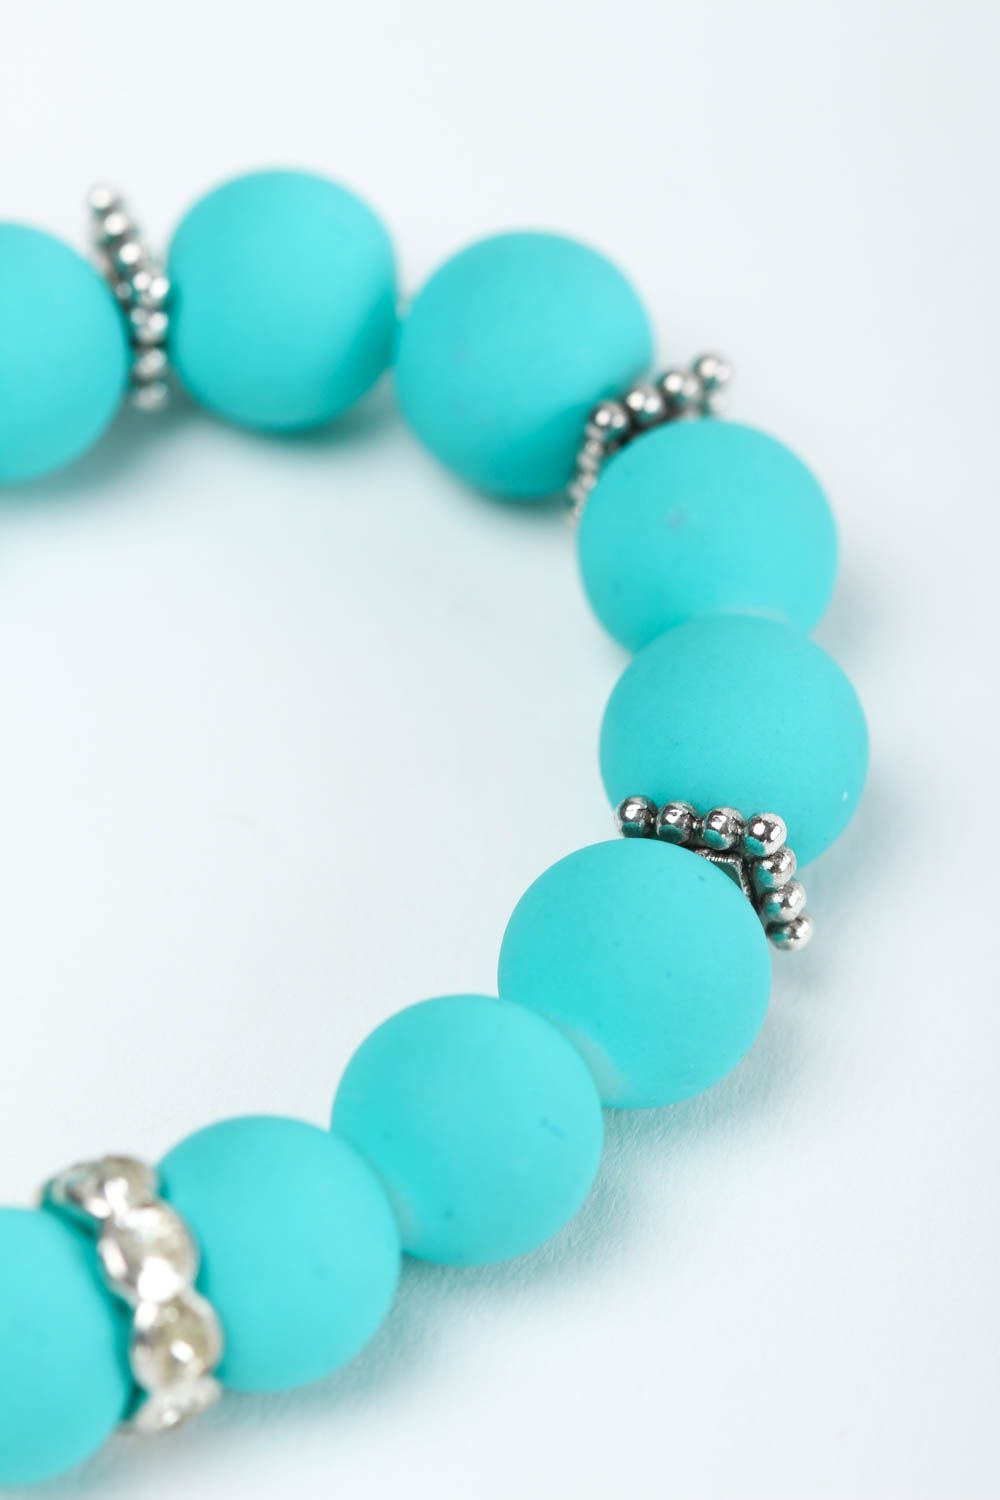 Beautiful handmade ceramic bead bracelet wrist bracelet designs gifts for her photo 4